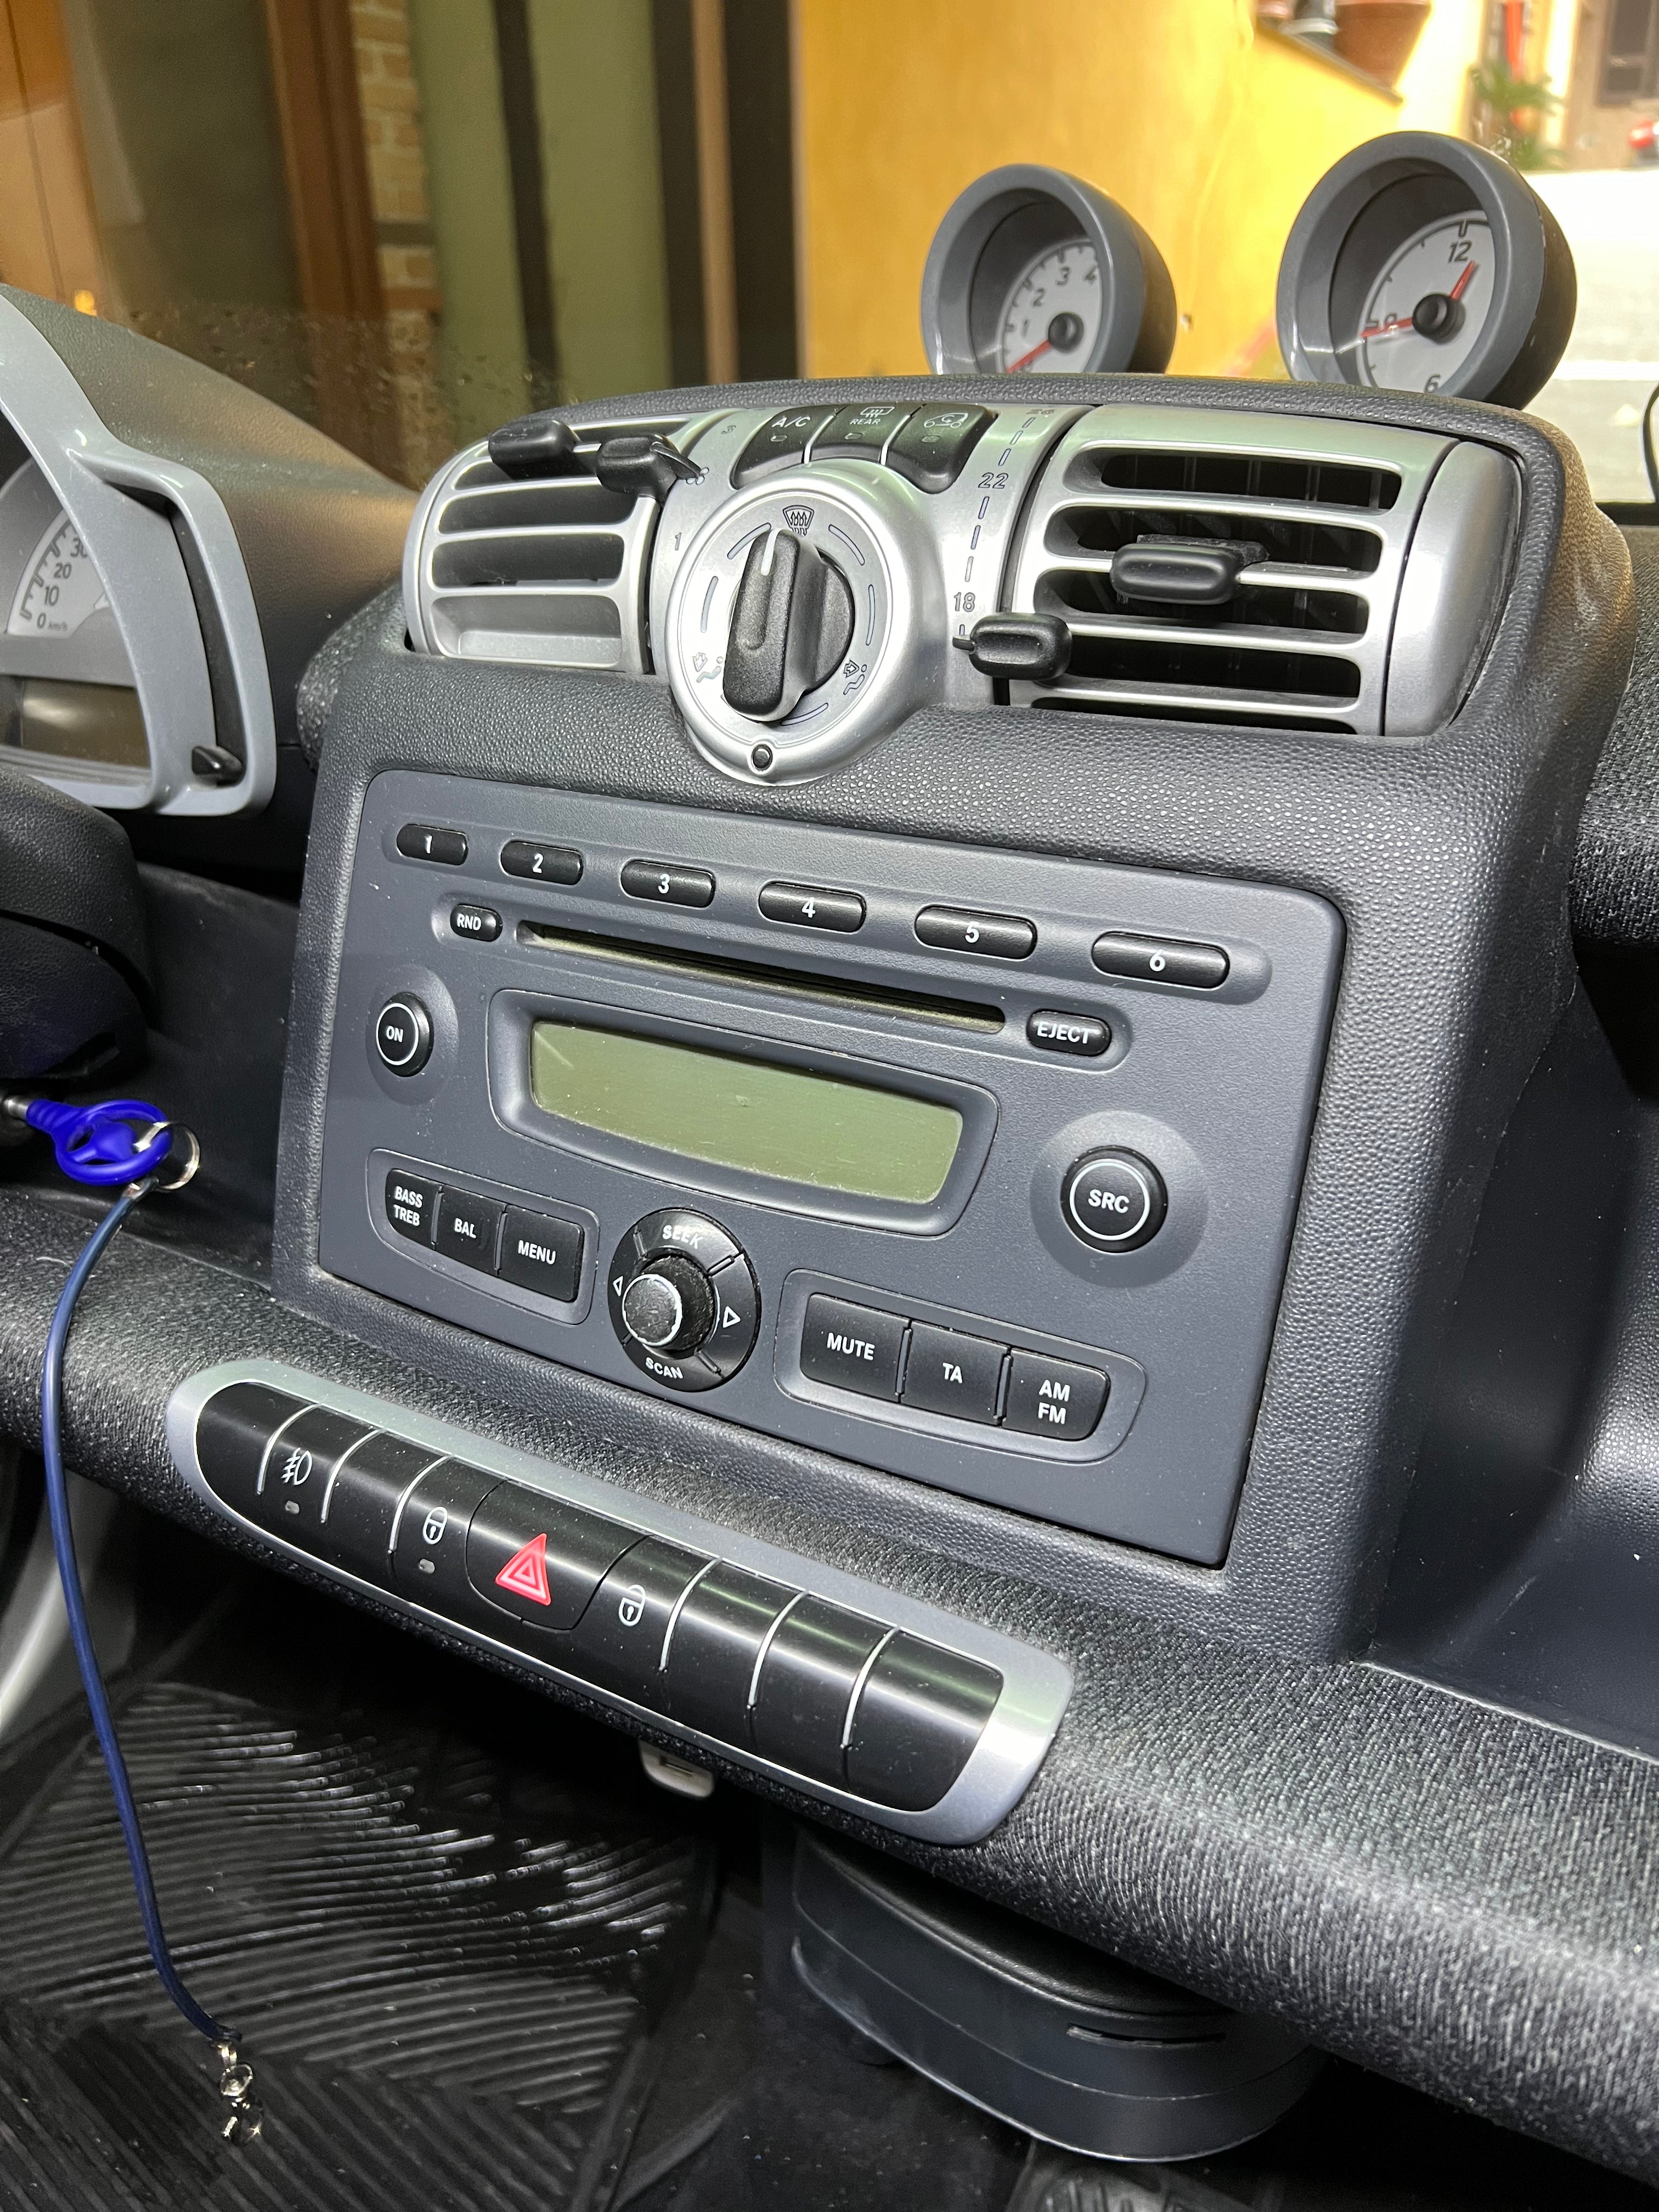 Autoradio per SMART 451 [2002 - 2015] - 2Din 7"Pollici Android, GPS, Bluetooth, Radio, Navigatore, Wifi, PlayStore.